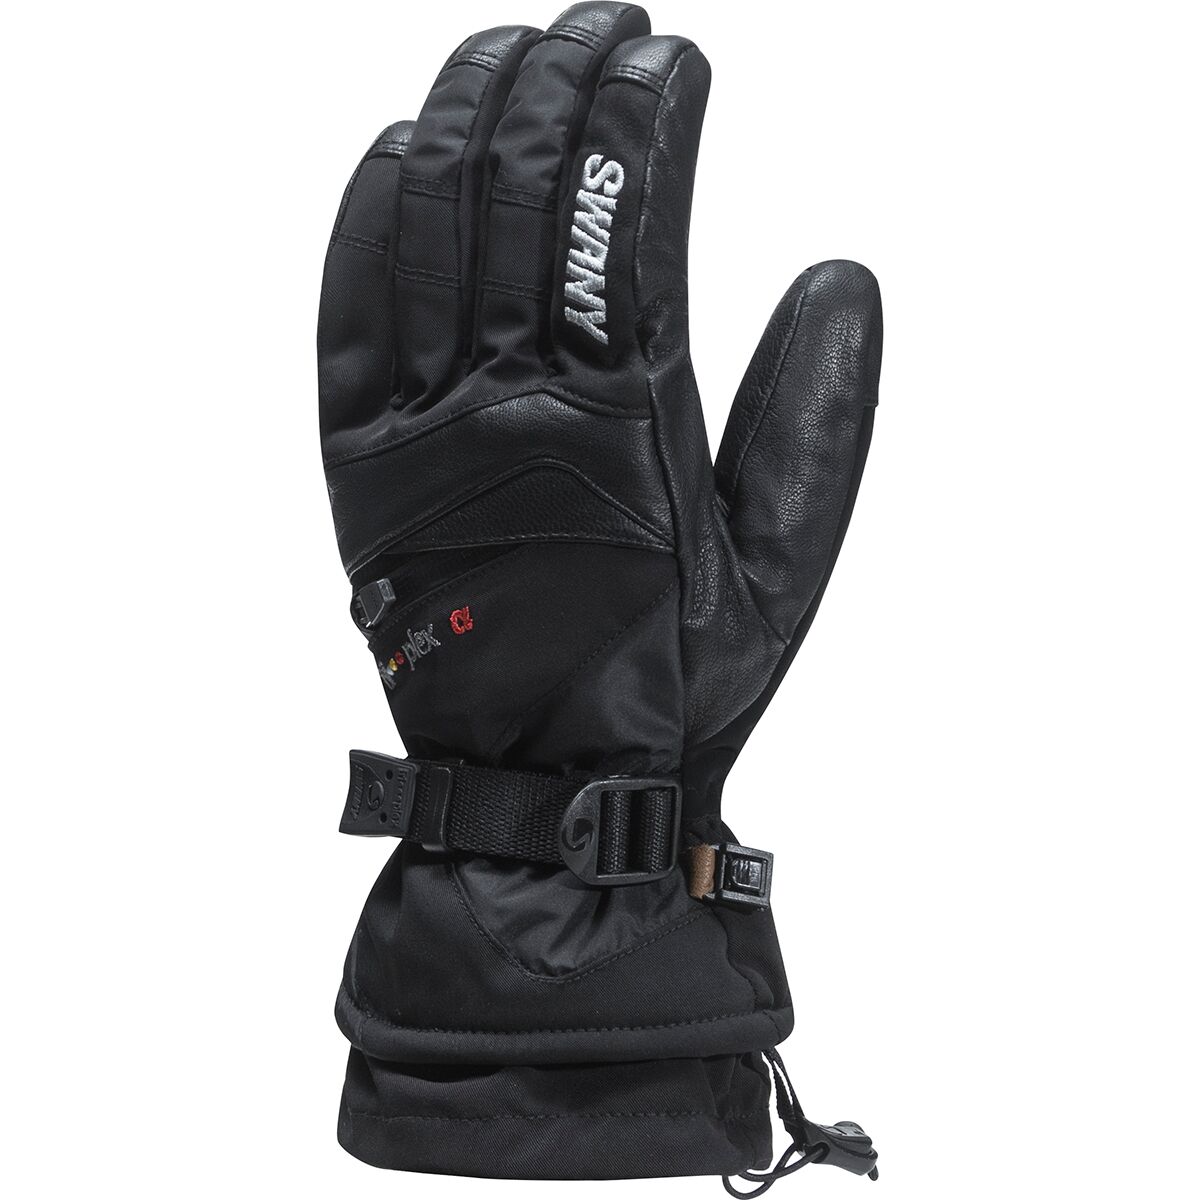 Swany X-Change Glove - Men's Black